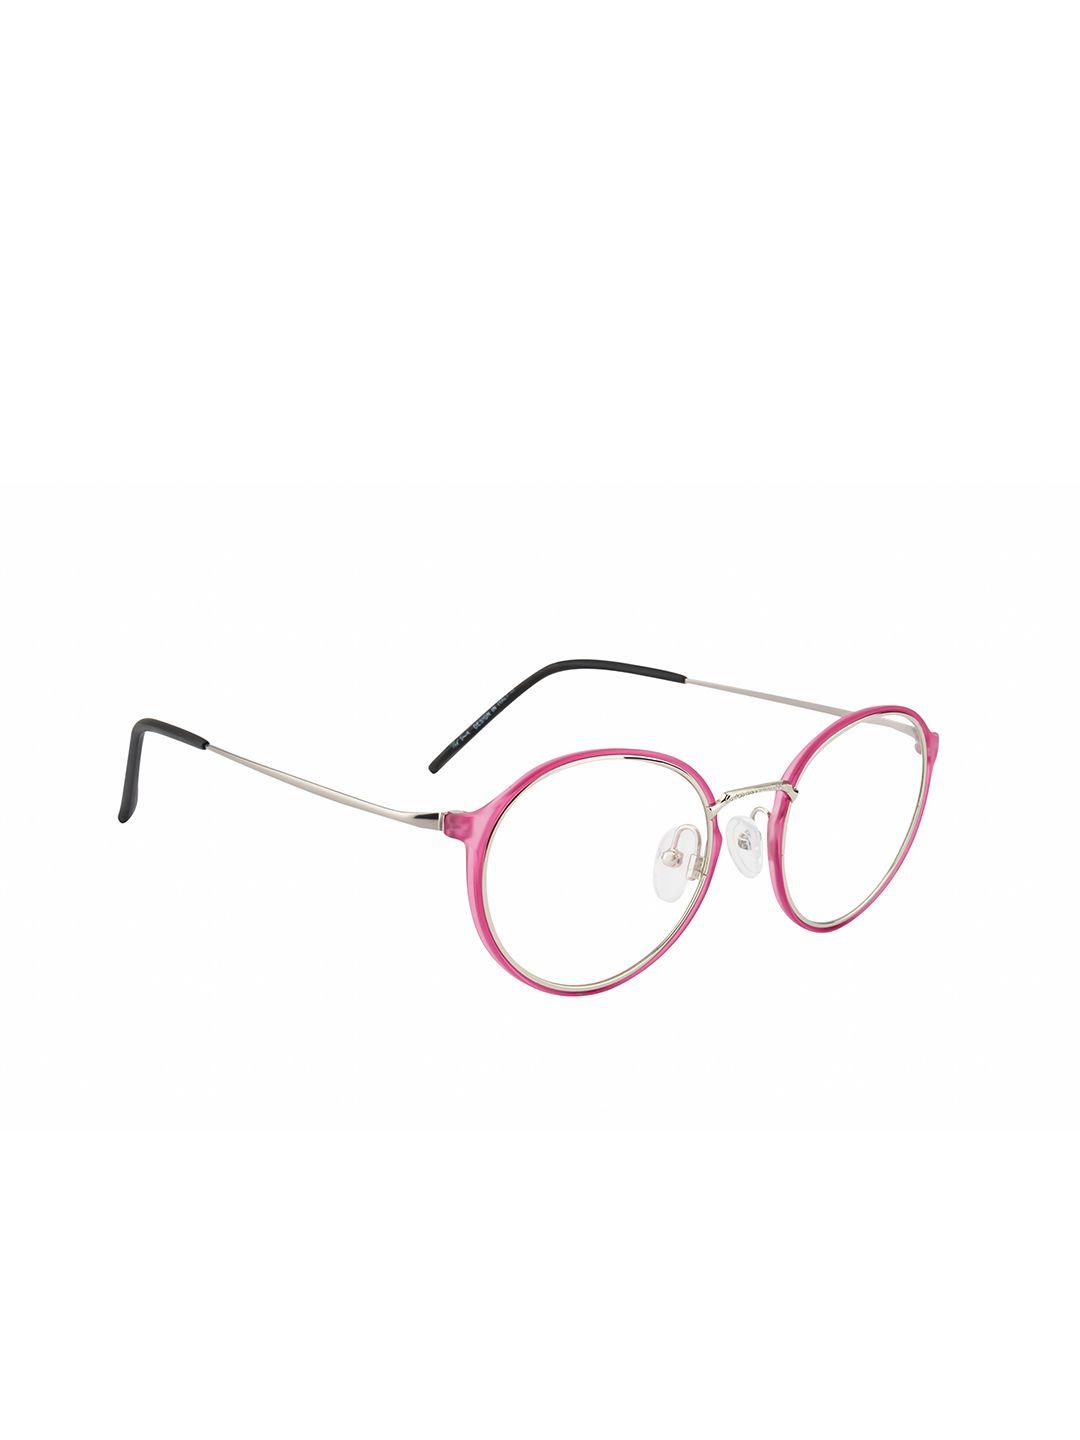 ted smith unisex pink & black full rim round frames eyeglasses